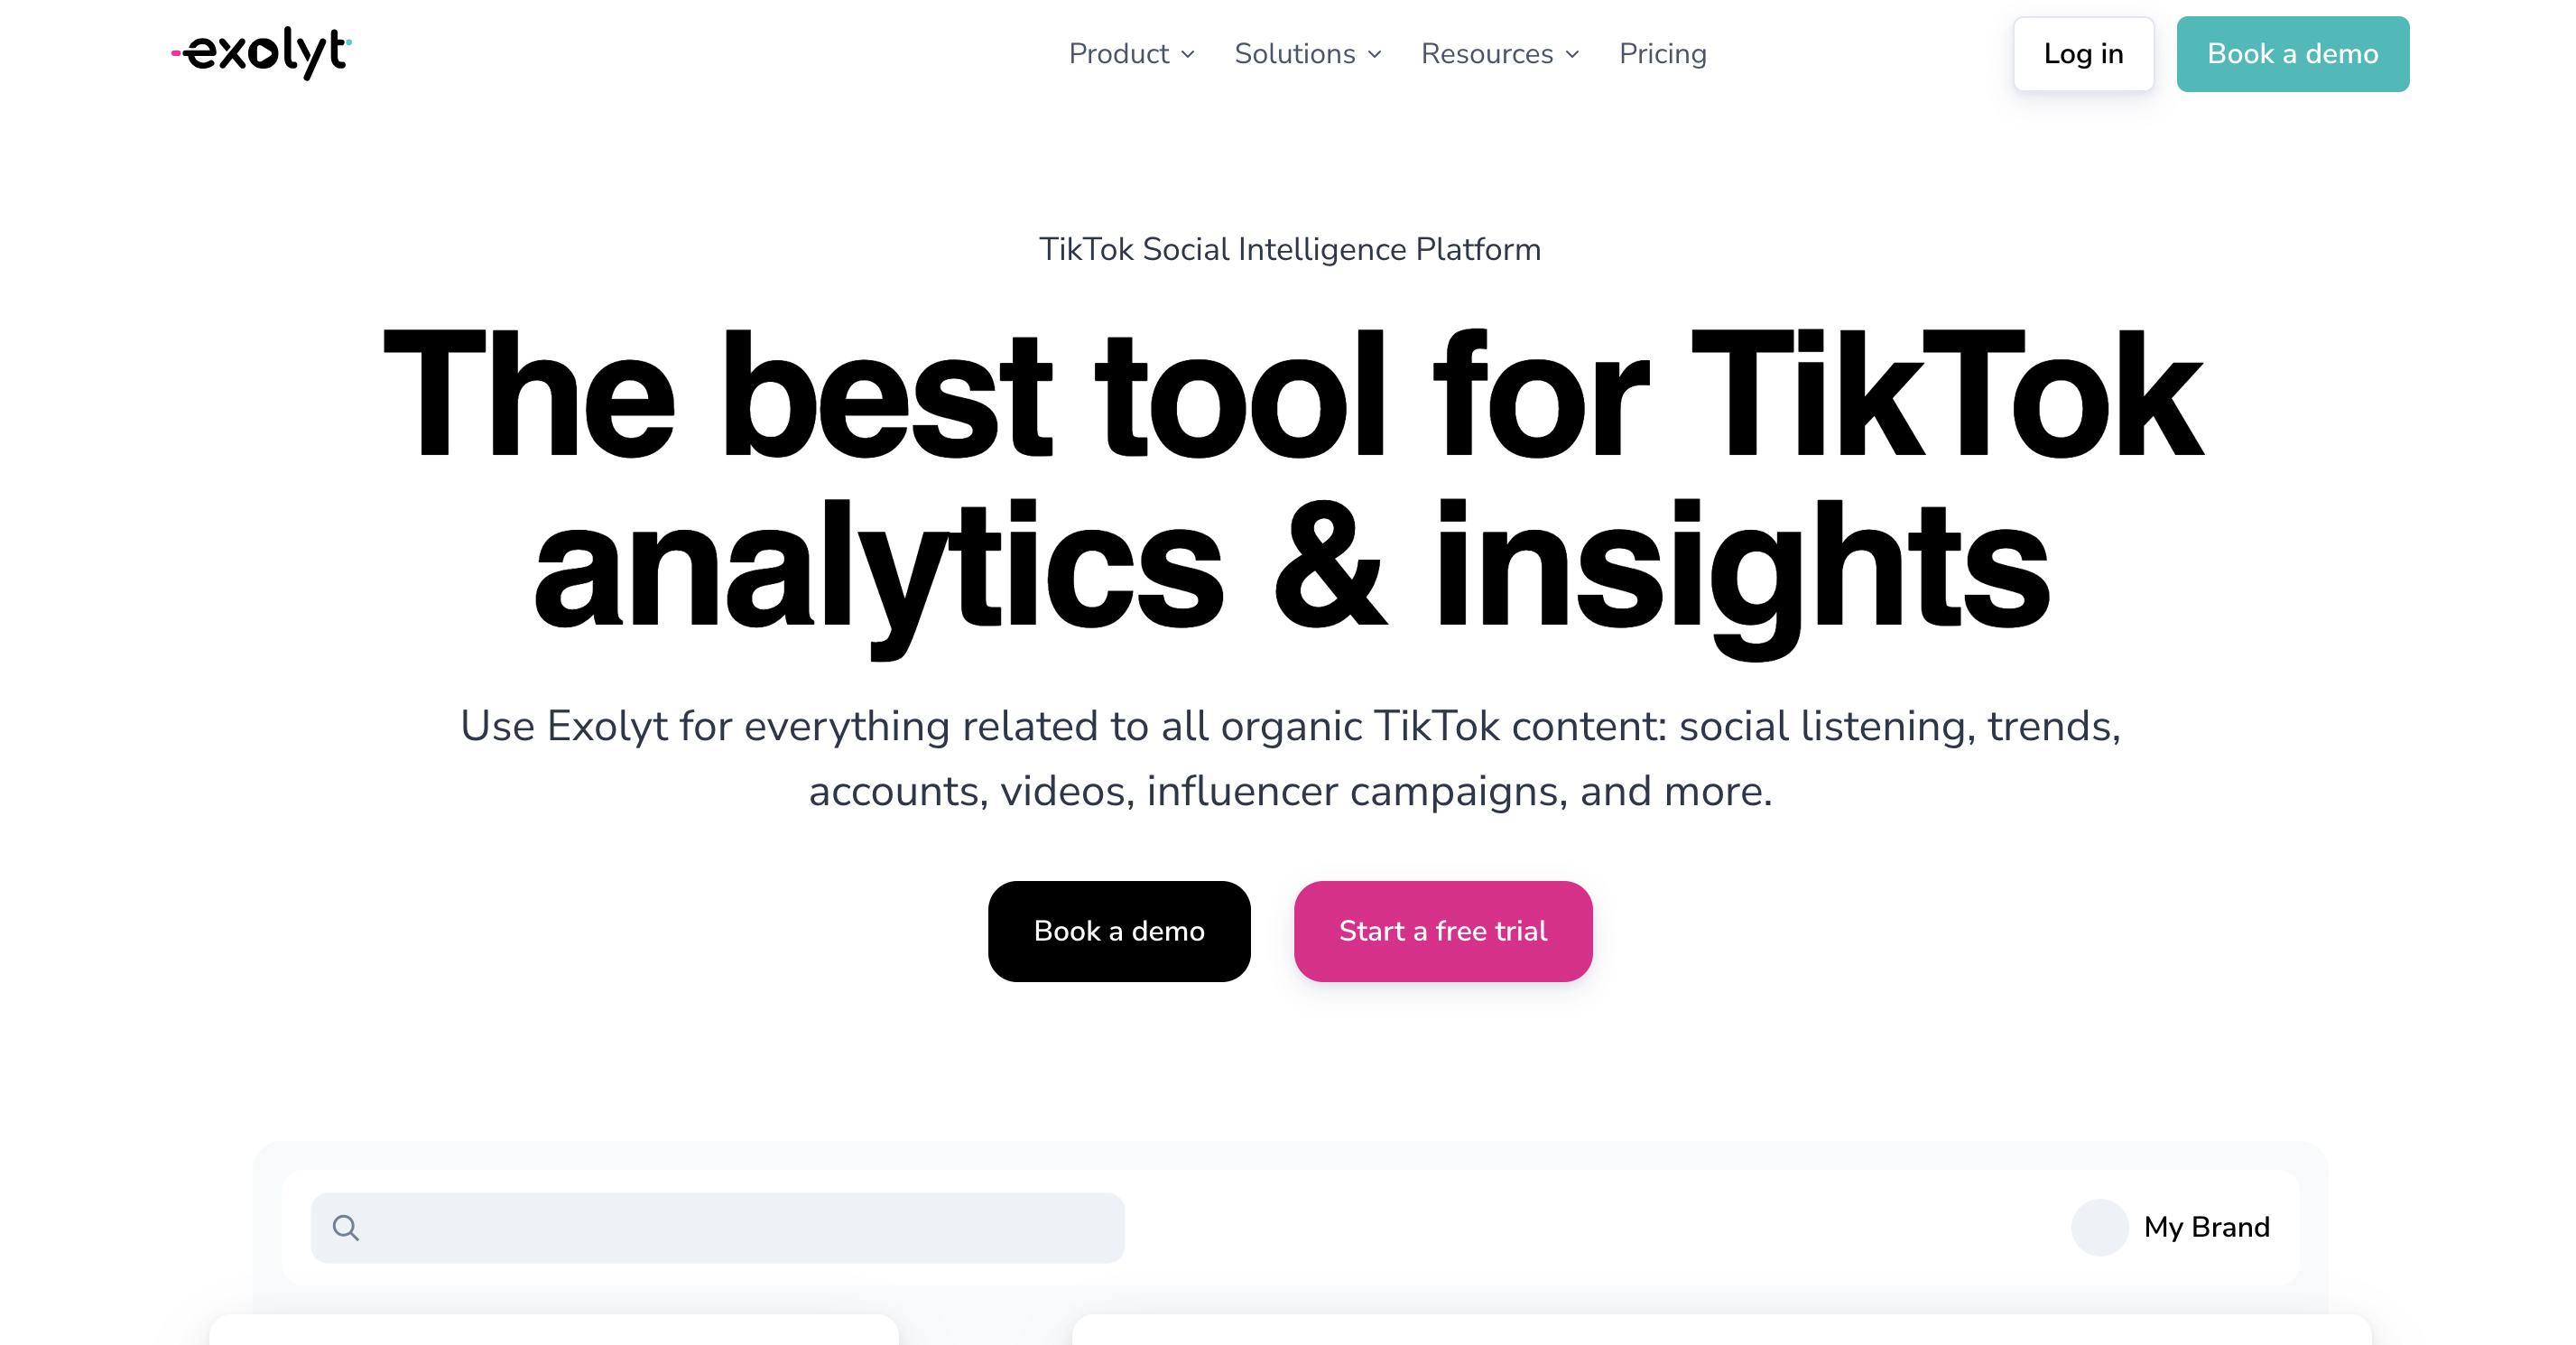 A screenshot of TikTok analytics tool Exolyt's website